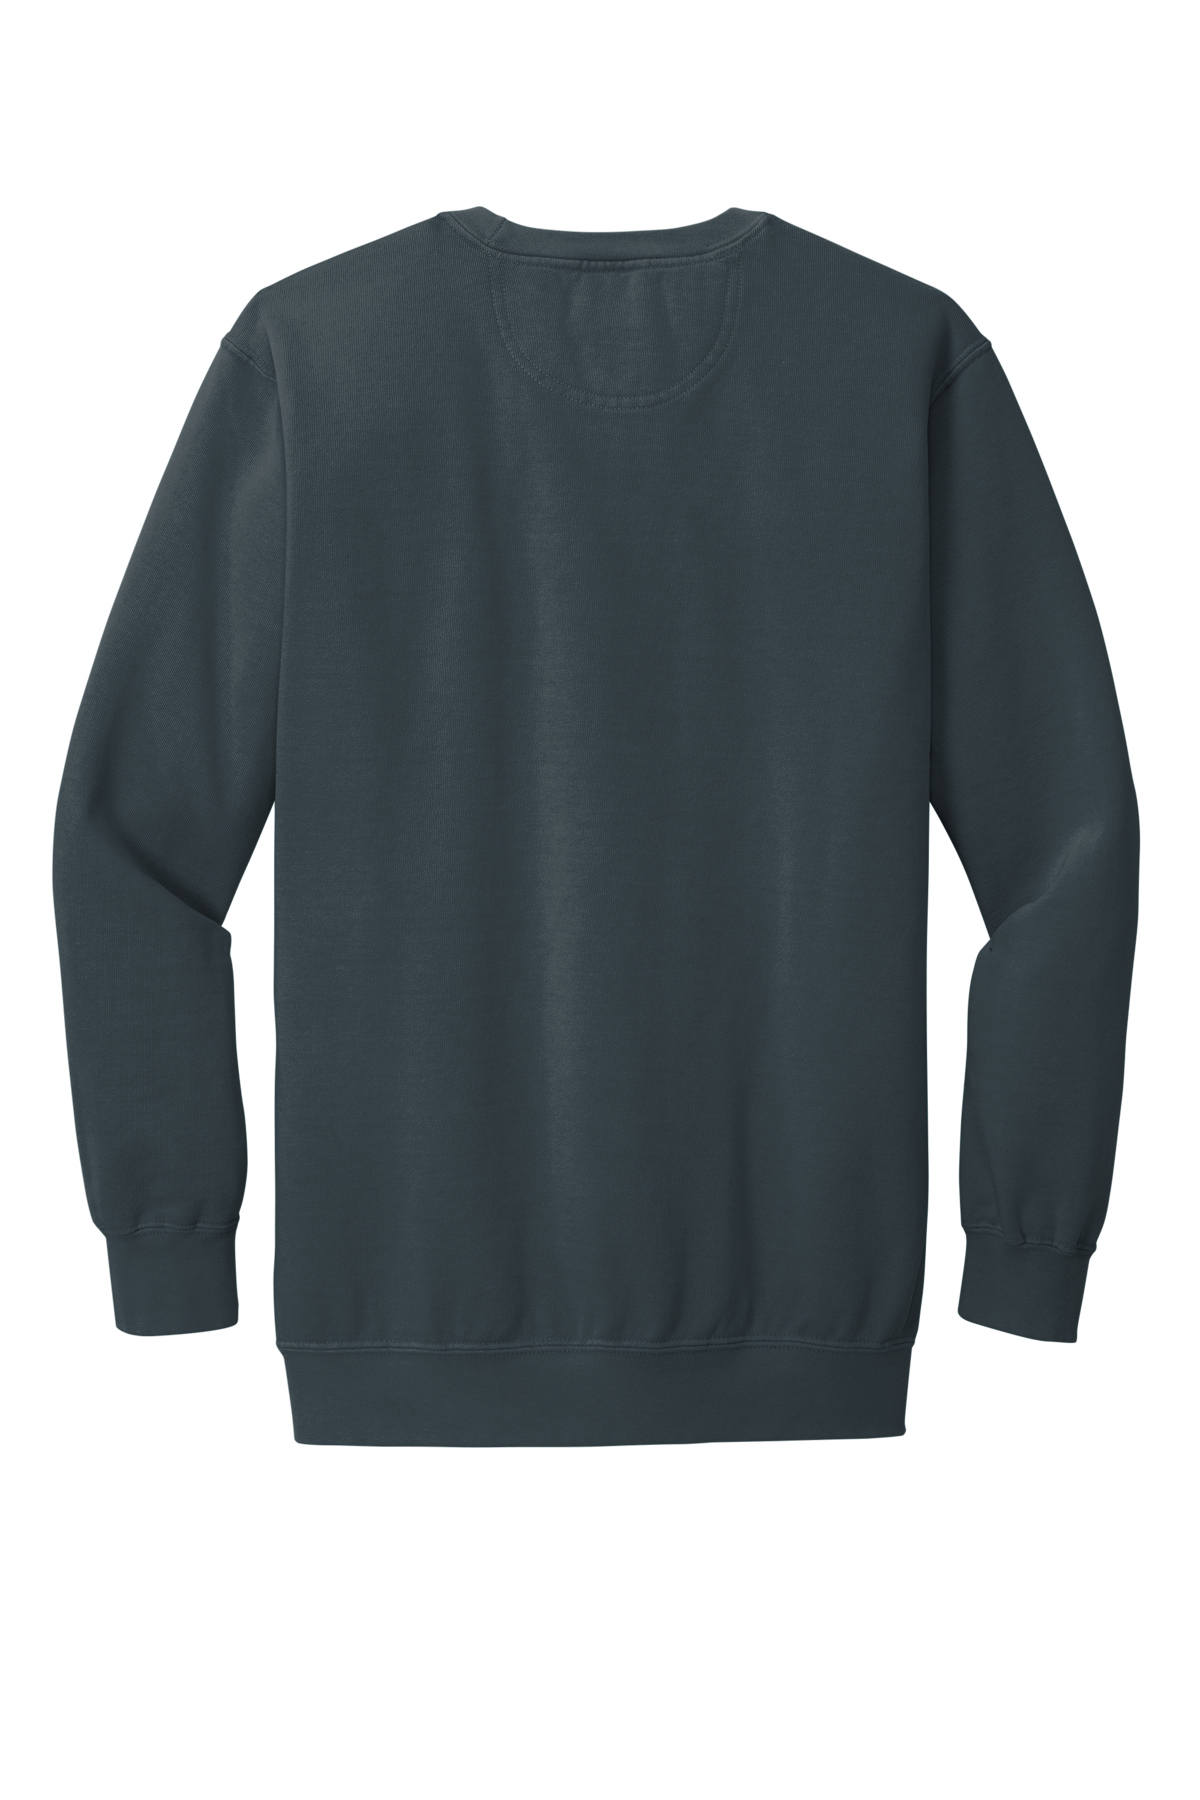 Comfort Colors Ring Spun Crewneck Sweatshirt | Product | Company Casuals